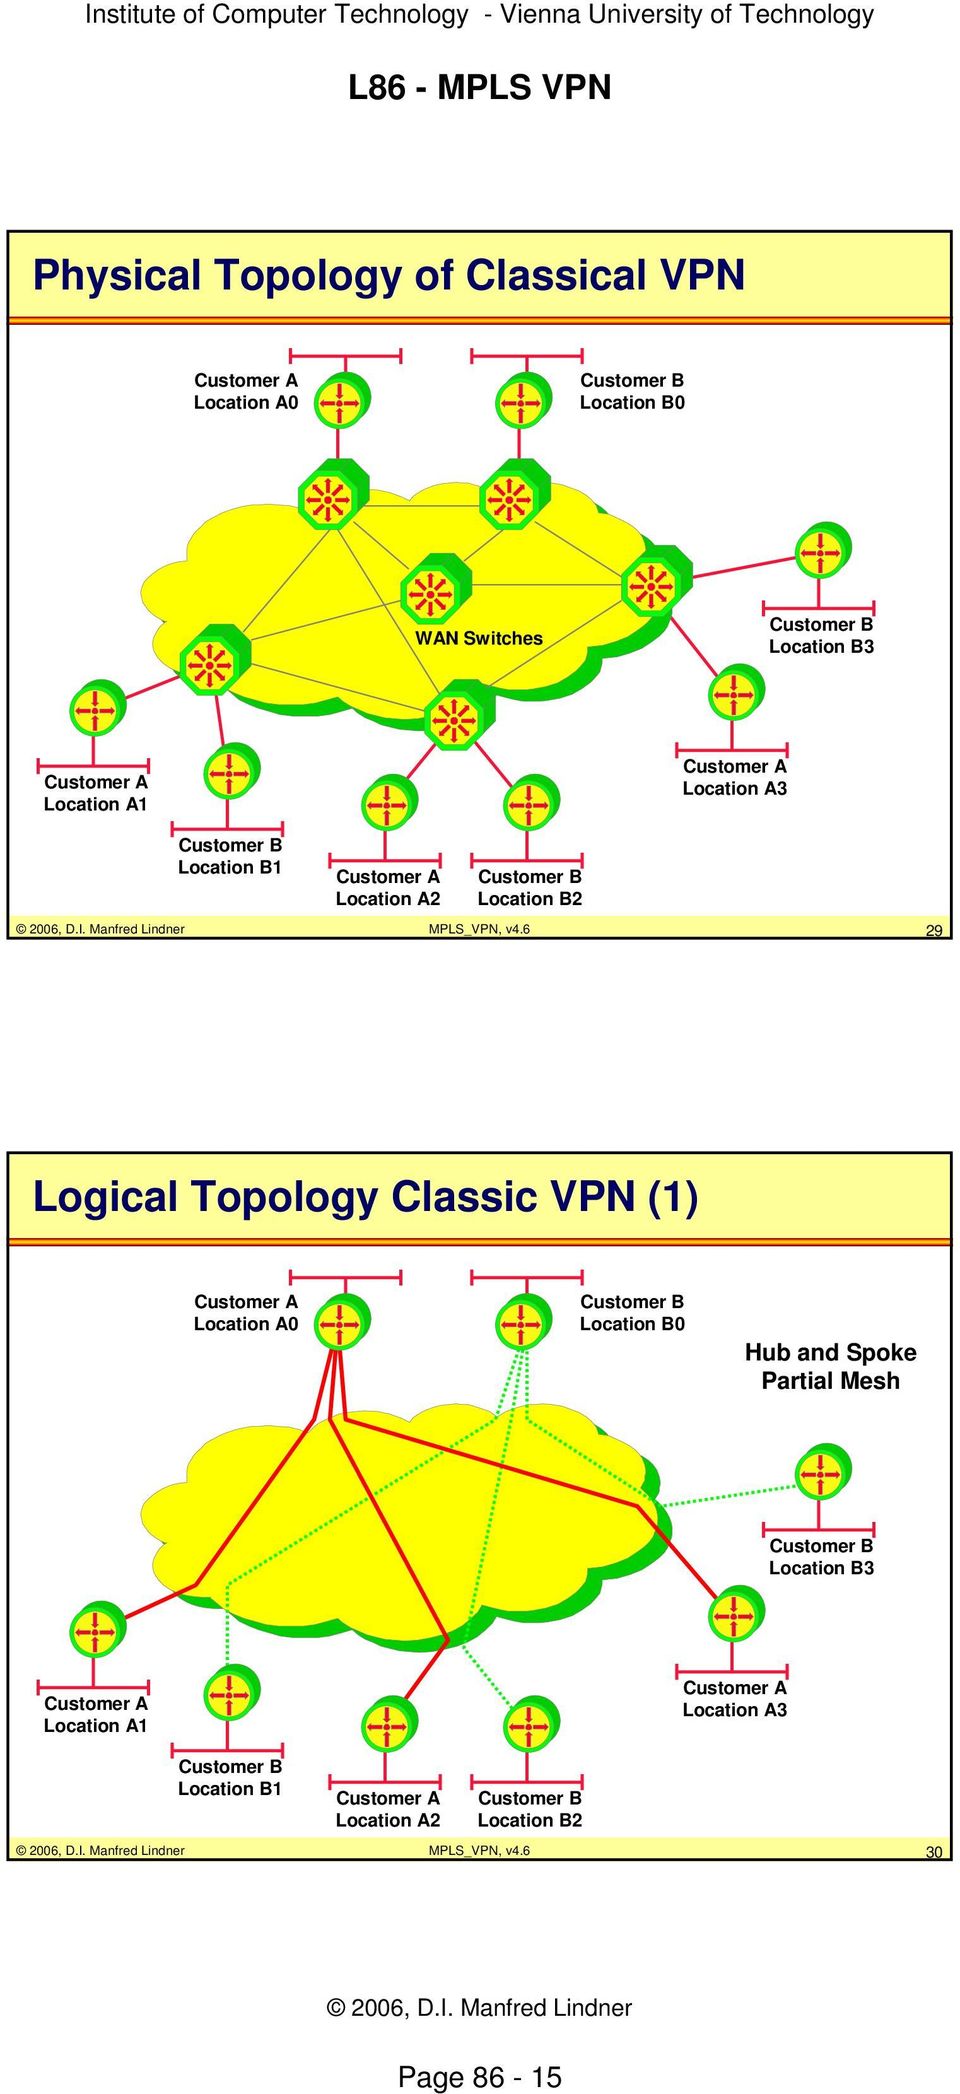 6 29 Logical Topology Classic VPN (1) Customer A Location A0 Customer B Location B0 Hub and Spoke Partial Mesh Customer B Location